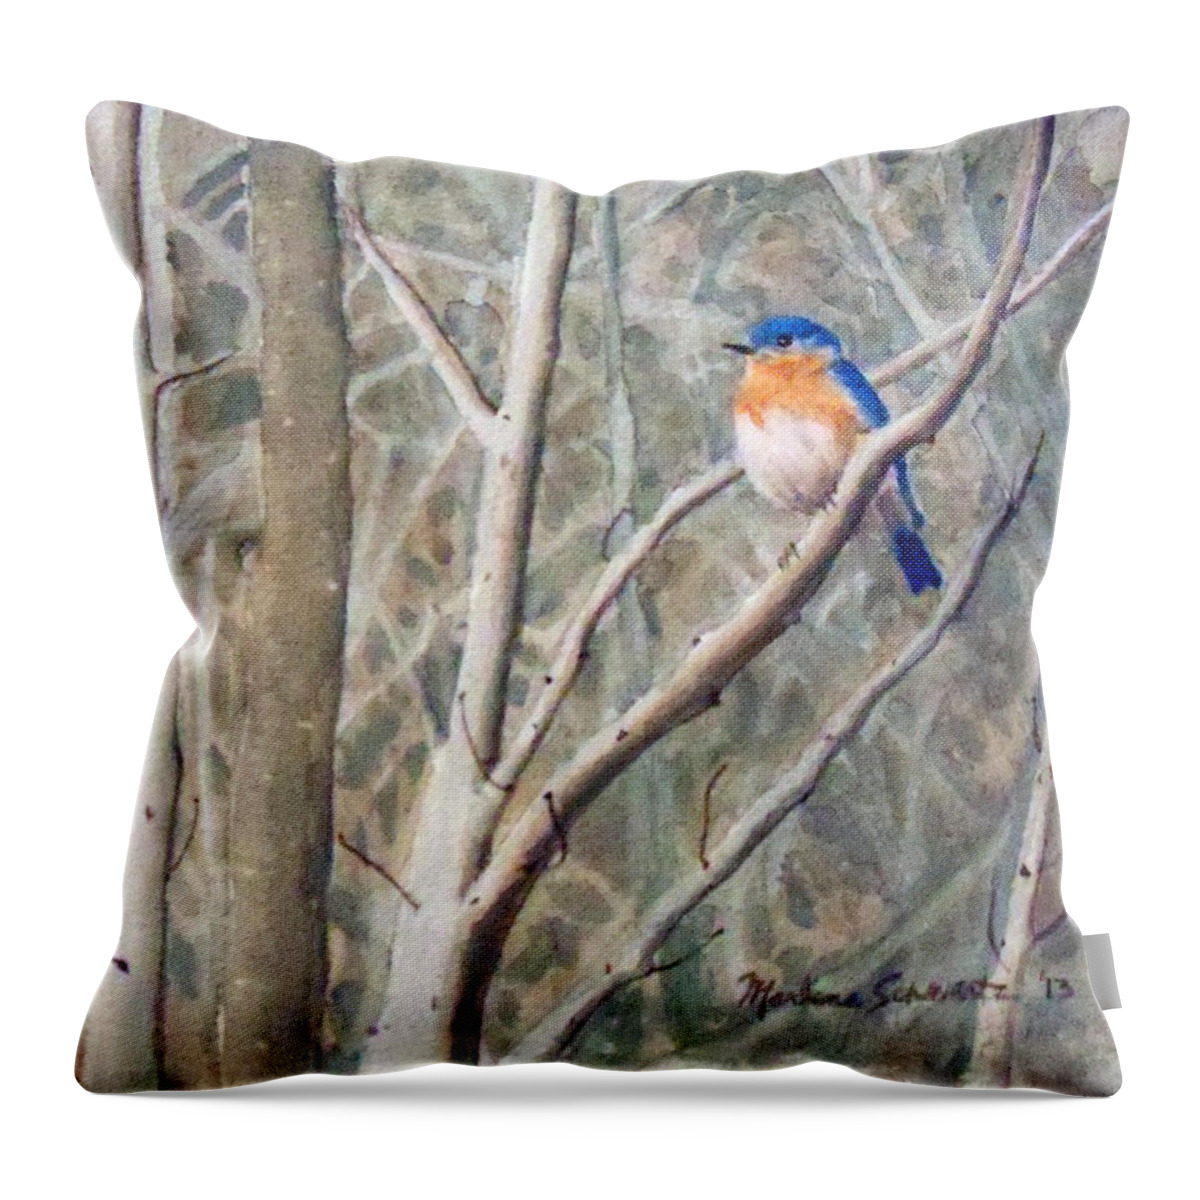 Bluebird Throw Pillow featuring the painting Something Blue by Marlene Schwartz Massey